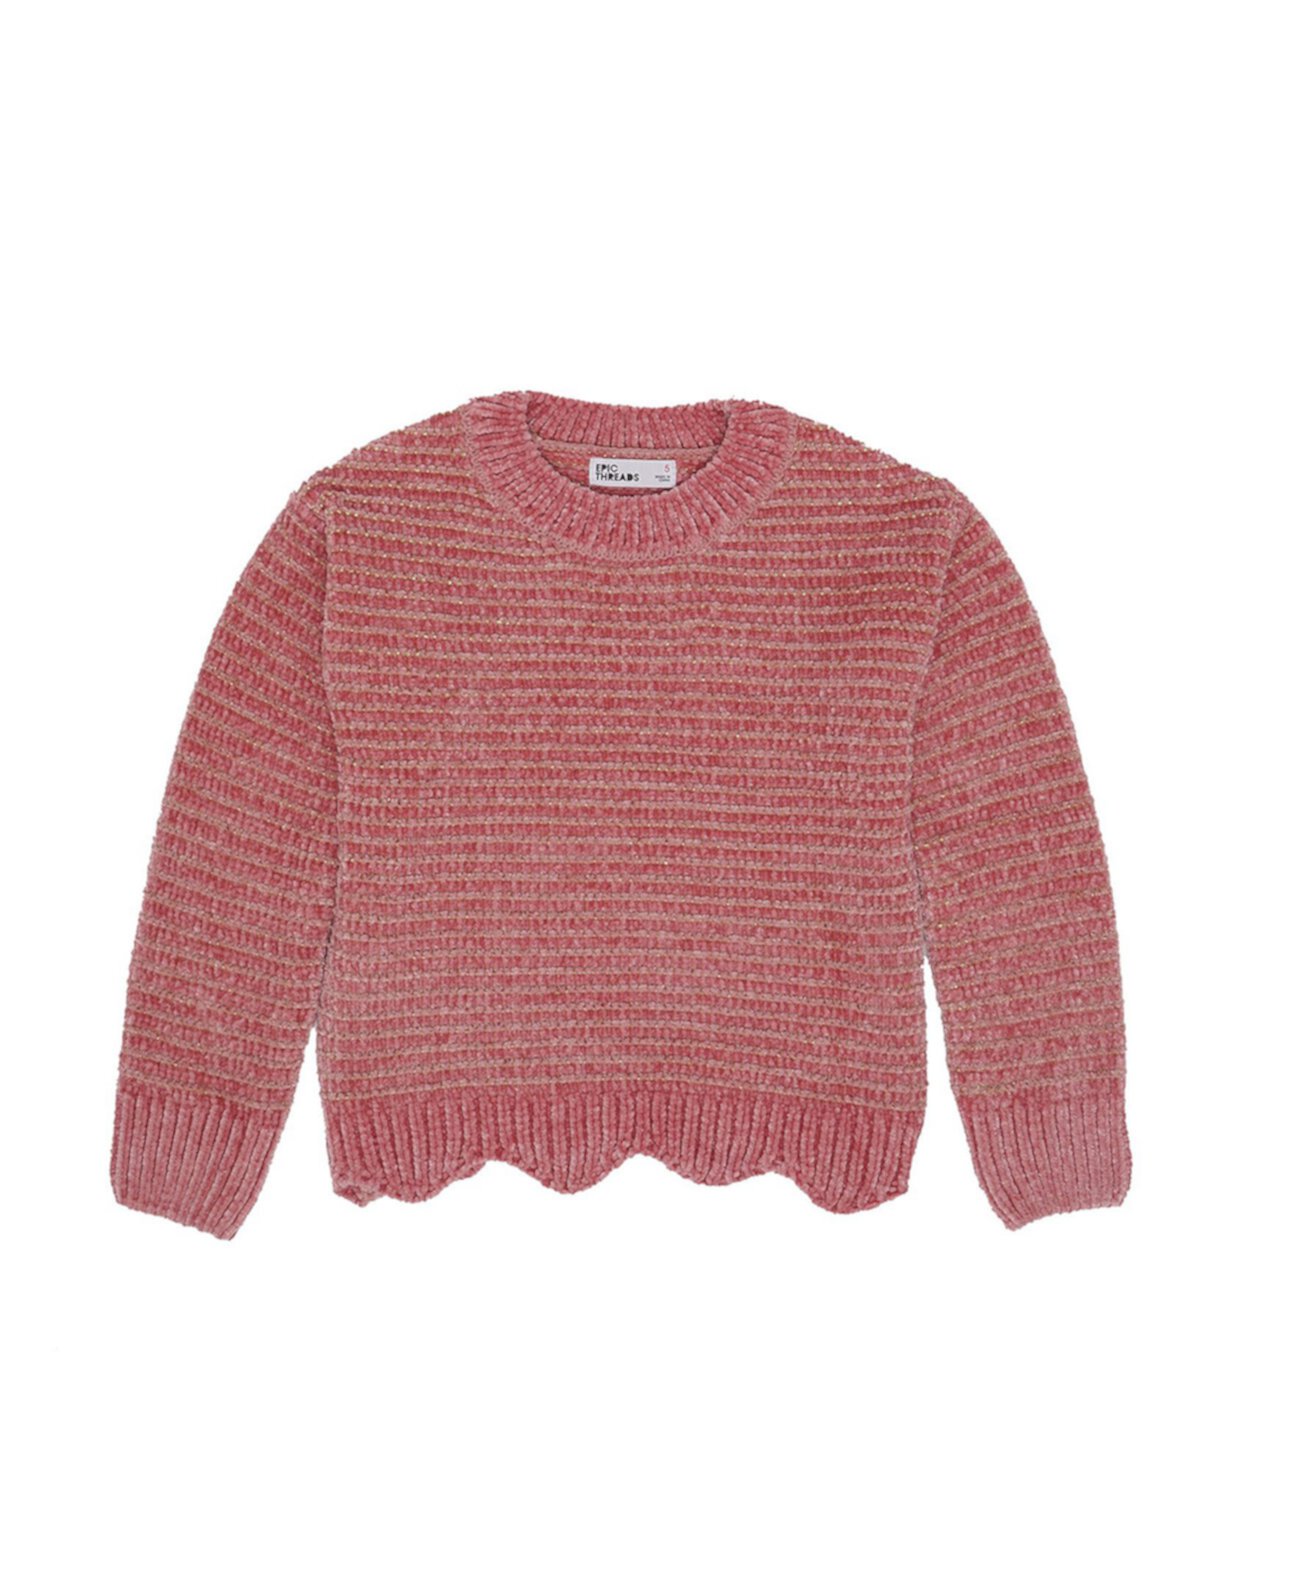 Однотонный вязаный свитер с зубчатым краем Little Girls Epic Threads